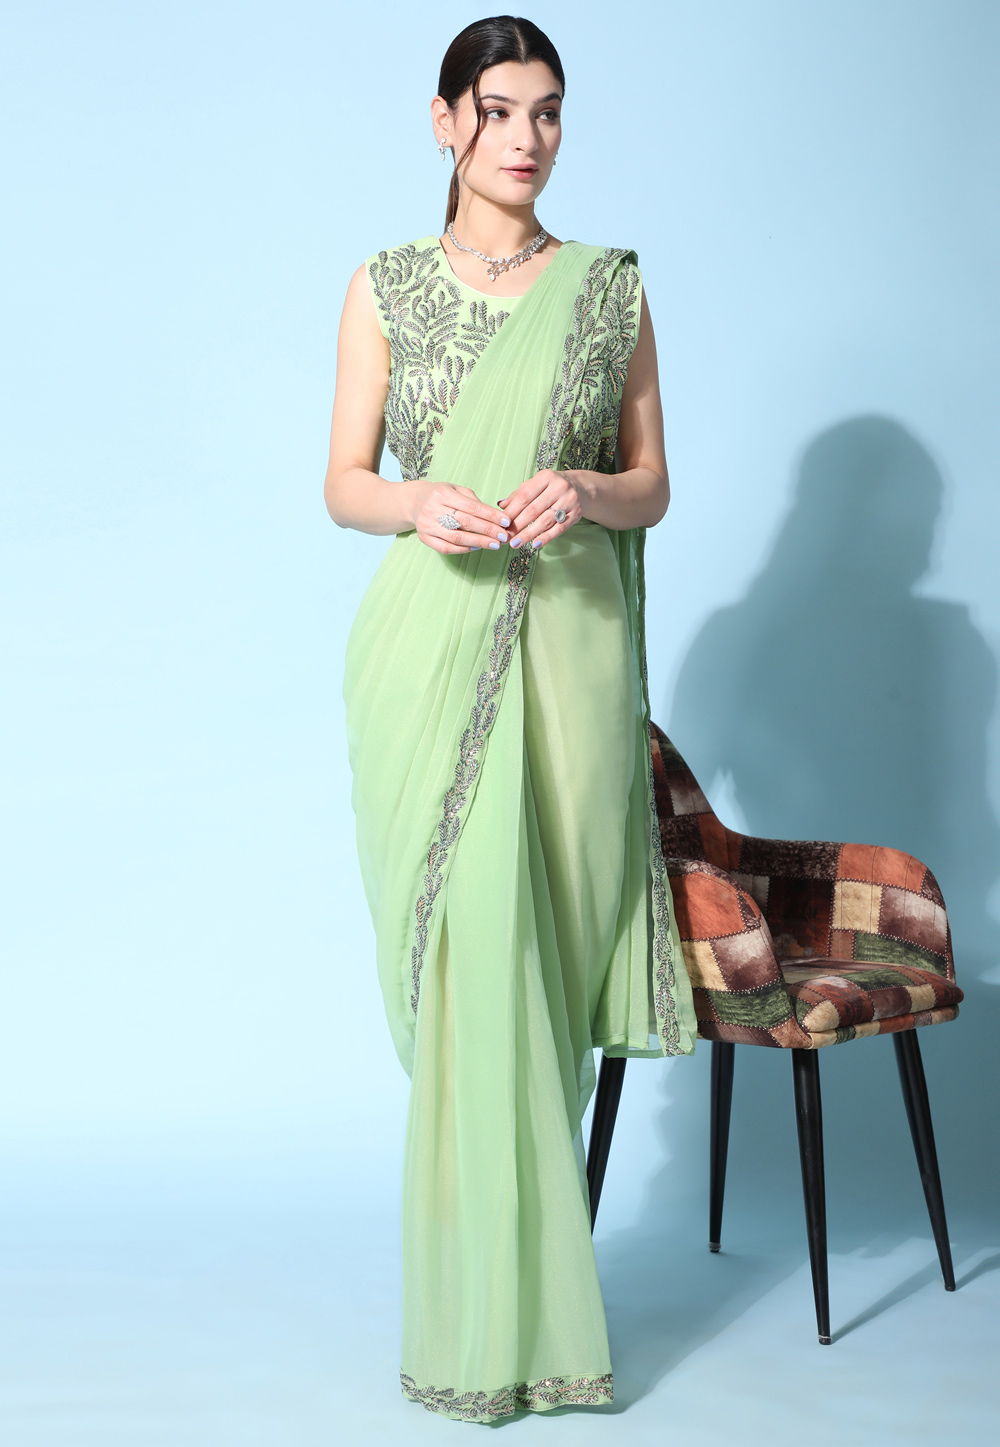 How to style bandhini saris? 5 Bollywood celebrities show you how to style  bandhini saris | Vogue India